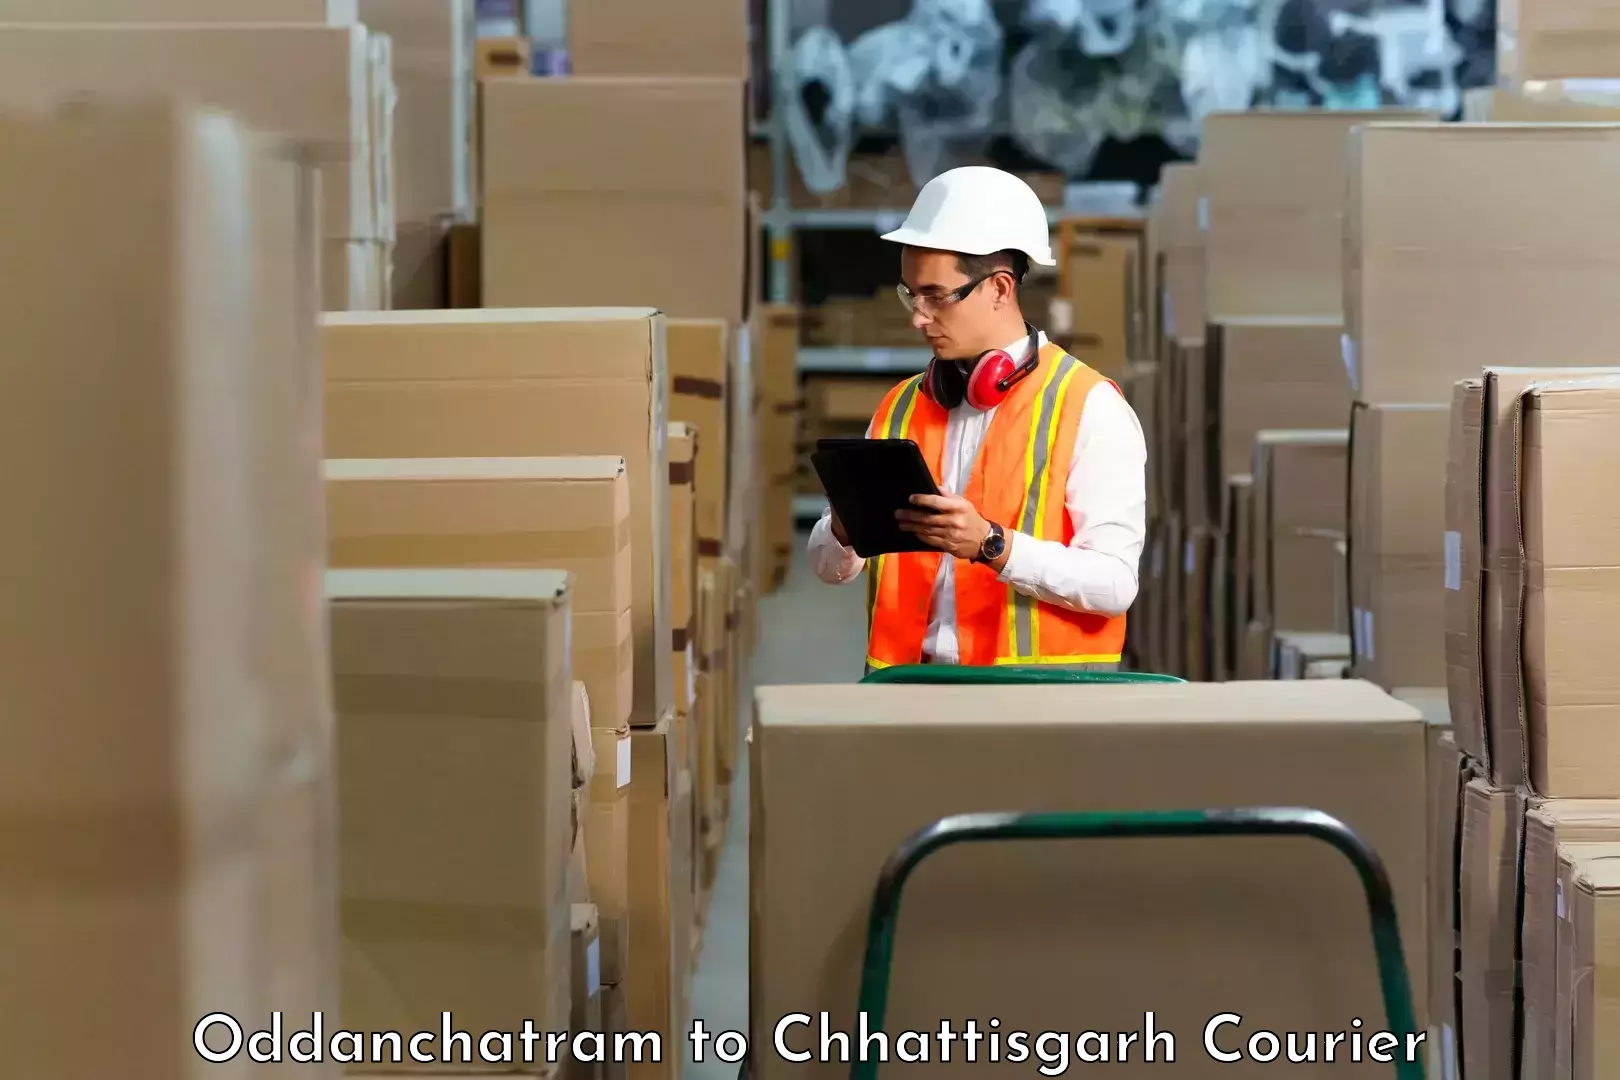 Specialized shipment handling Oddanchatram to Chhattisgarh